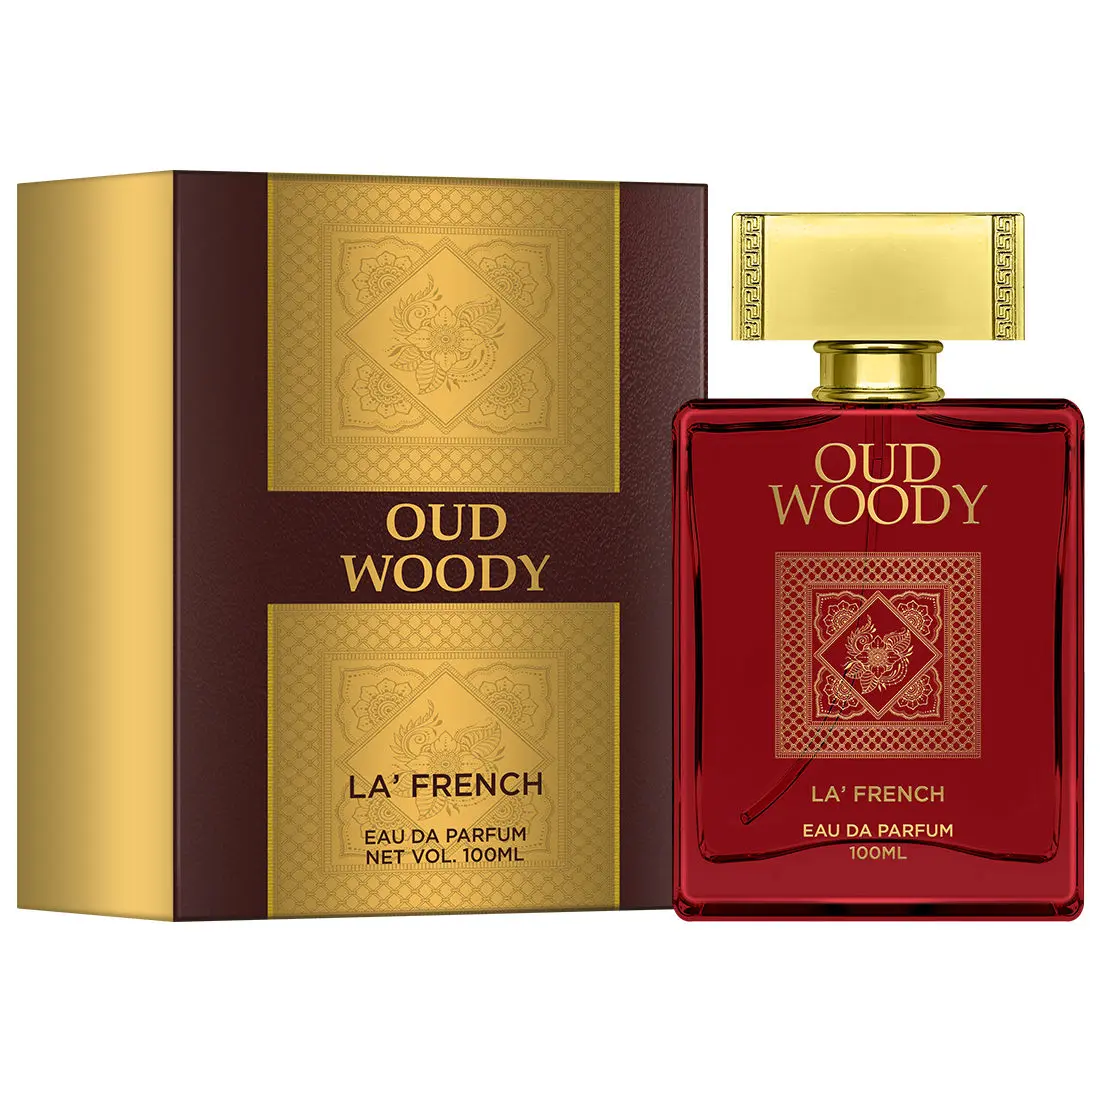 La French Oud Woody Eau De Parfum (100 ml)